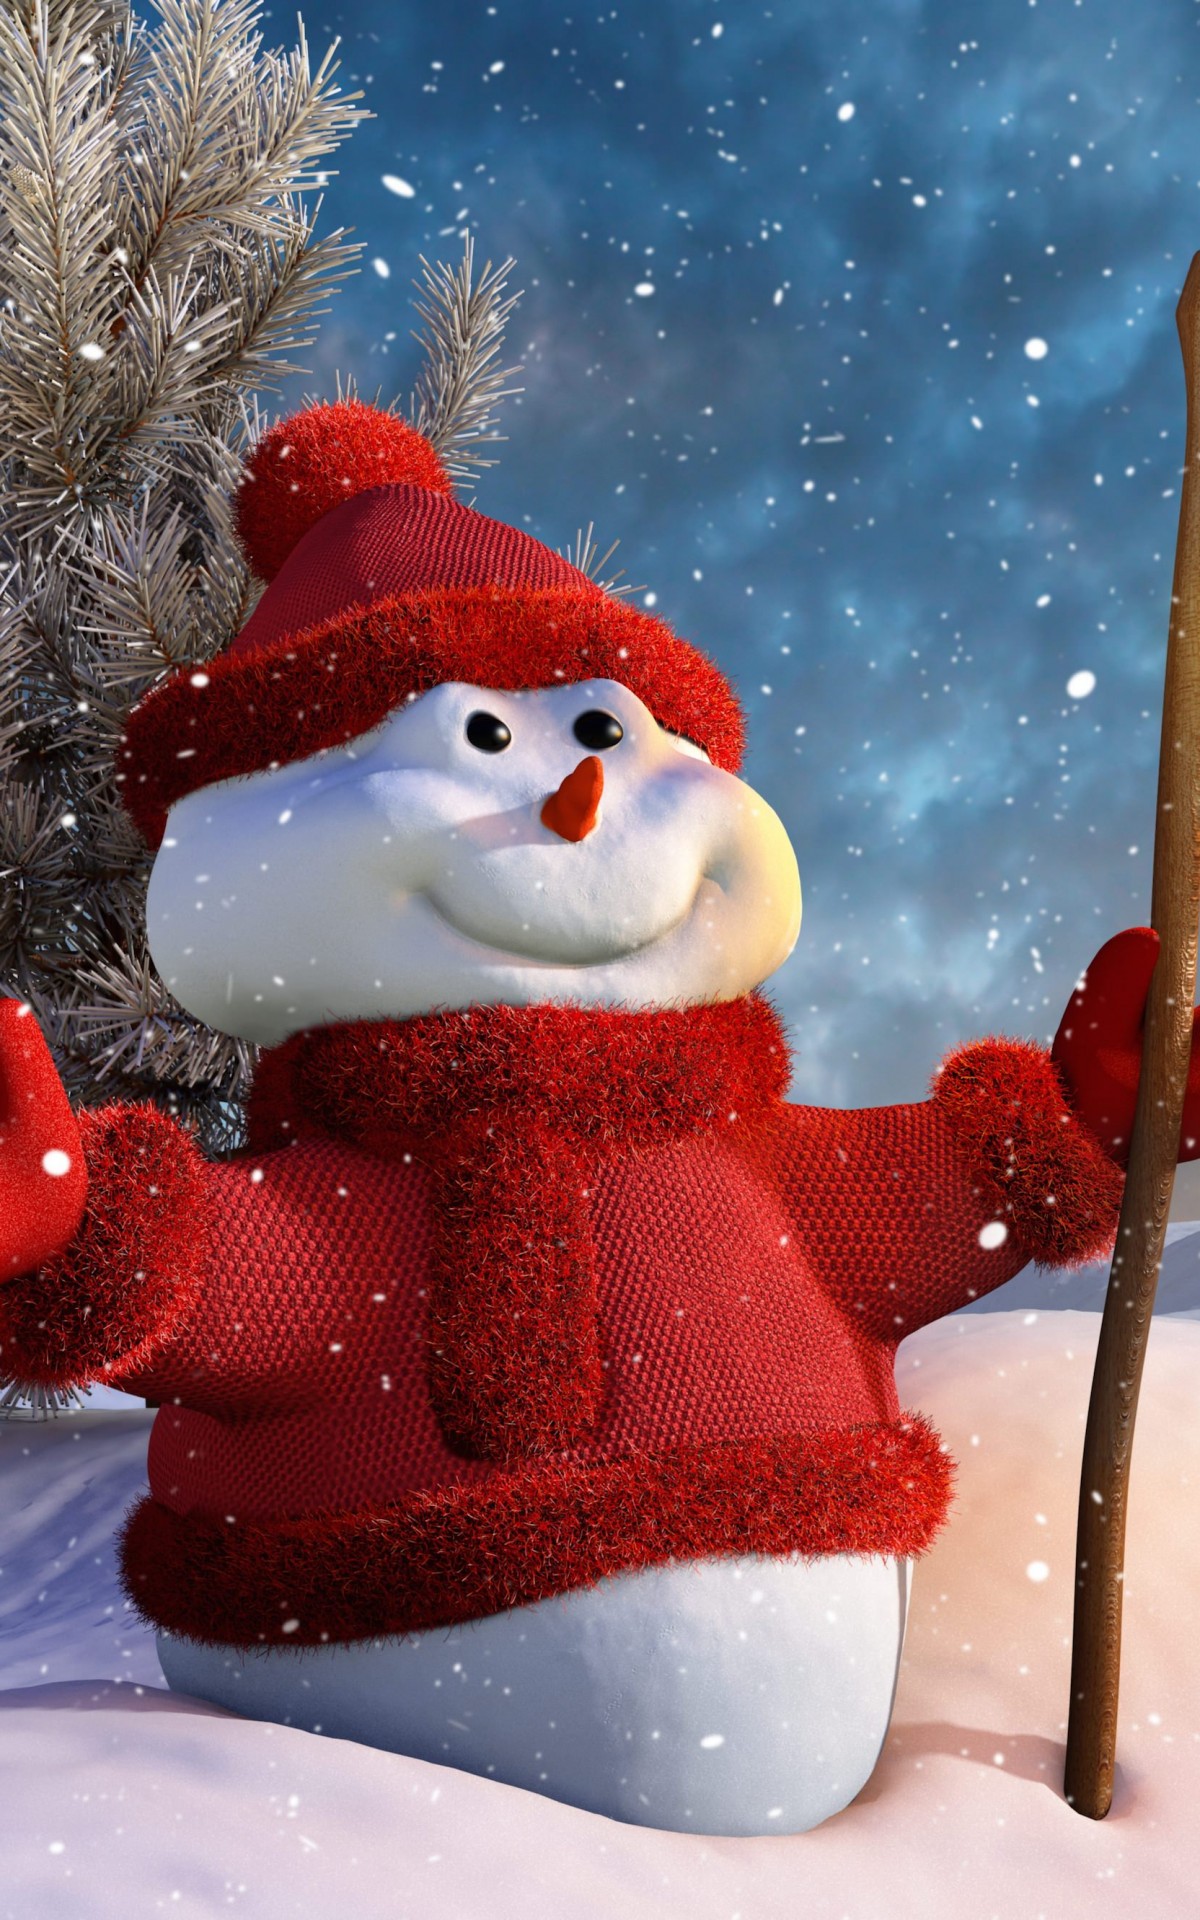 Christmas Snowman HD Wallpaper For Kindle Fire HDx HDwallpaper